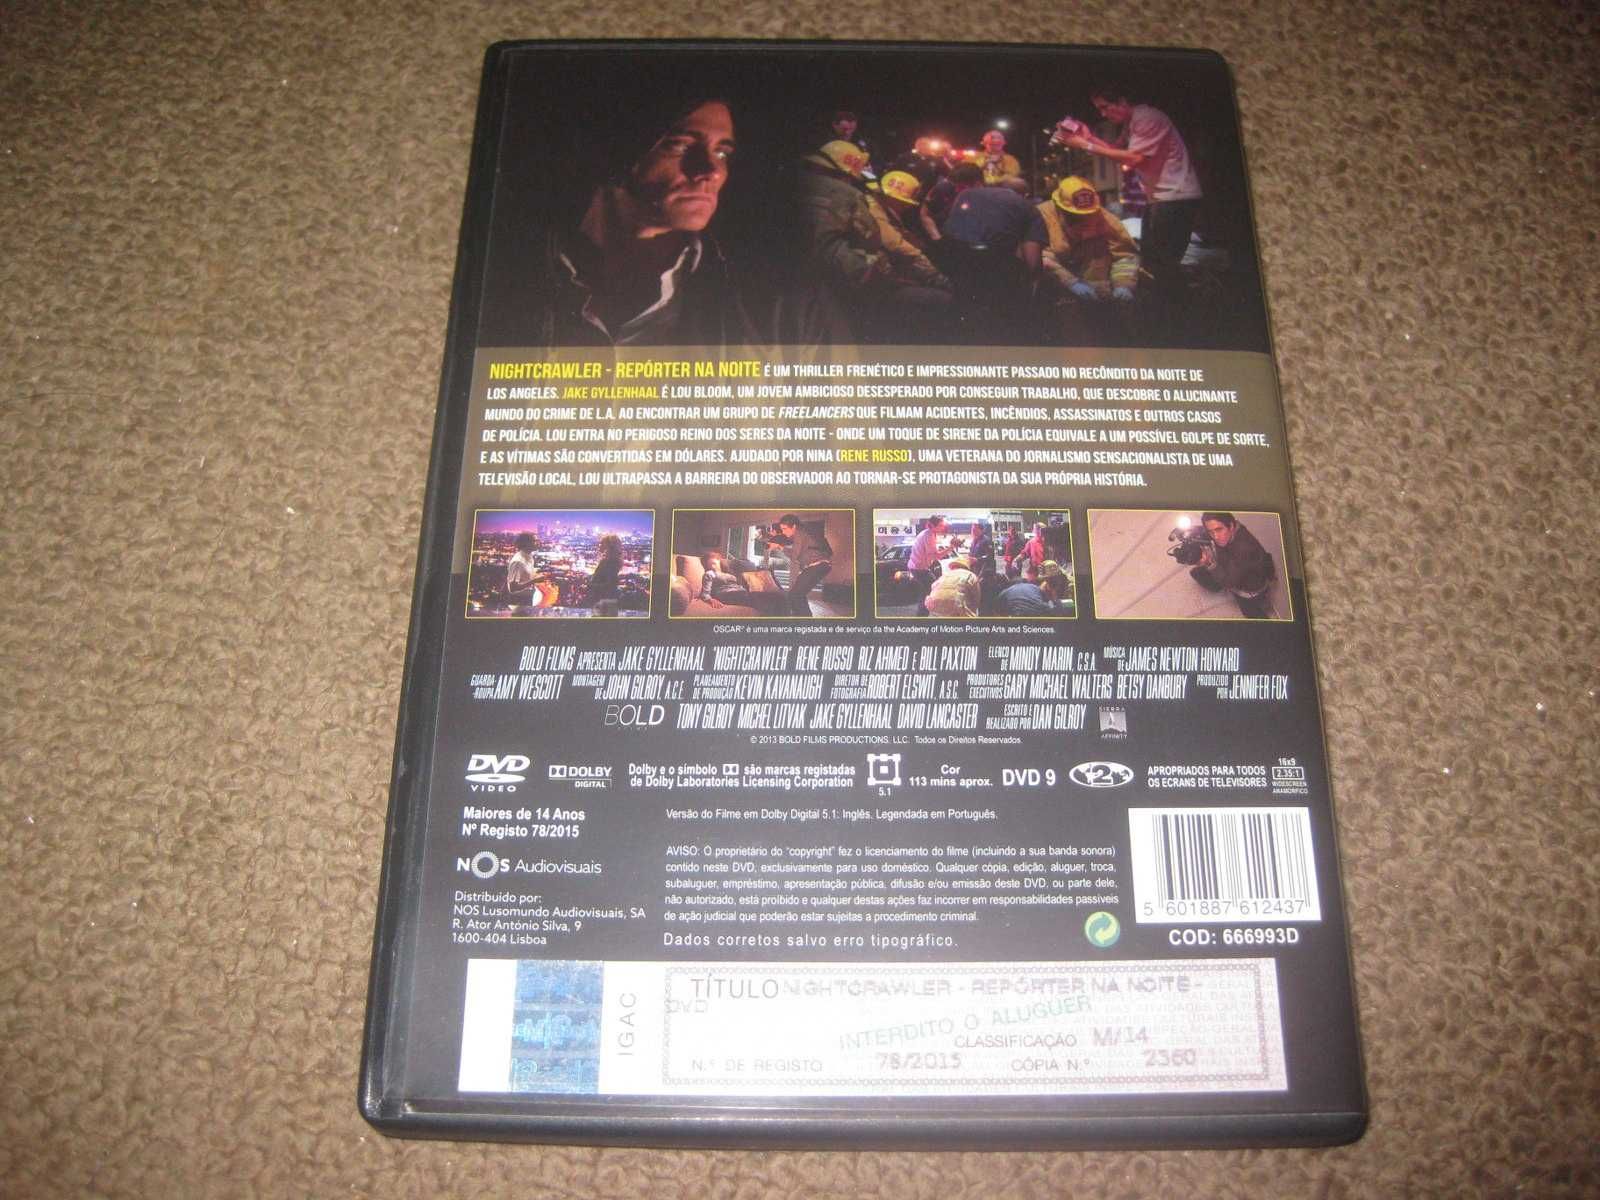 DVD "Nightcrawler - Repórter na Noite" com Jake Gyllenhaal